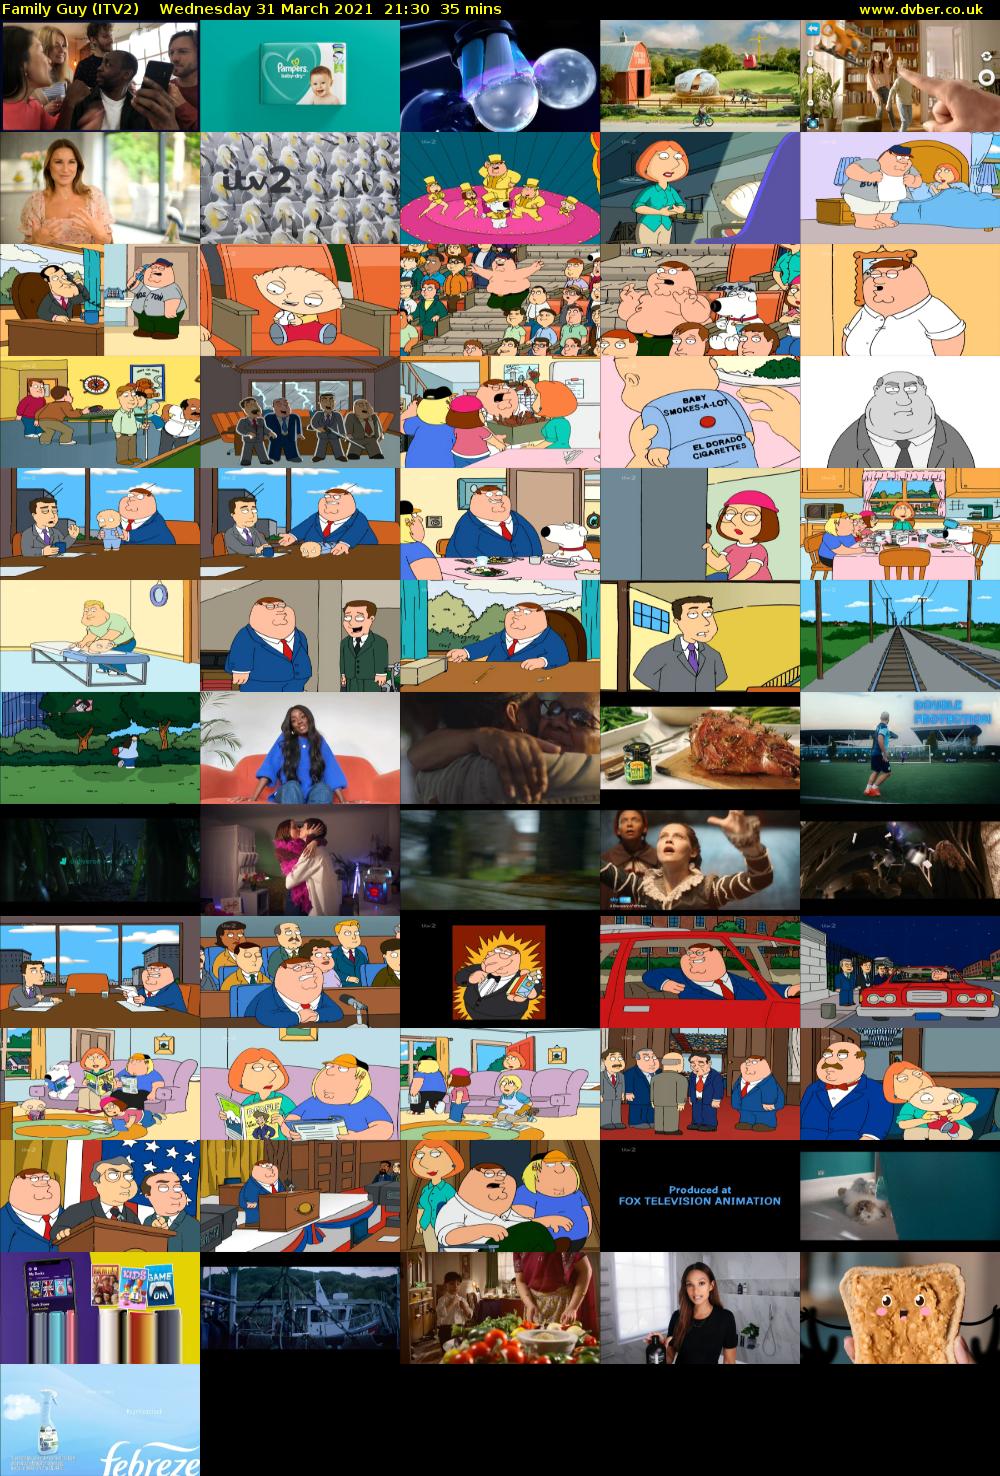 Family Guy (ITV2) Wednesday 31 March 2021 21:30 - 22:05